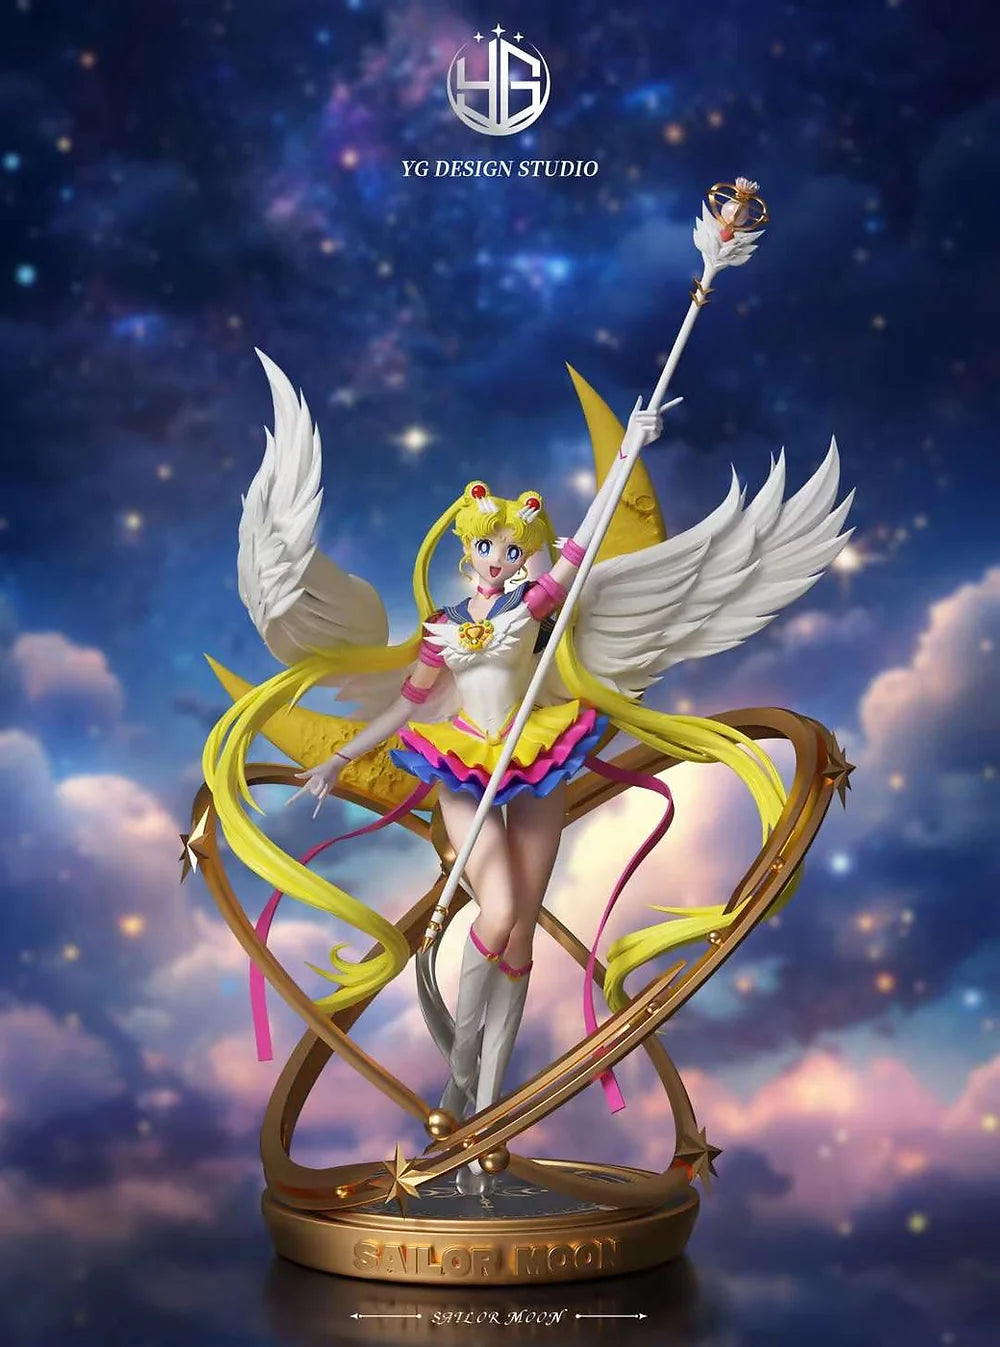 [PRE ORDER] Sailor Moon - YG Studio - Sailor Moon Tsukino Usagi (Price Does Not Include Shipping)